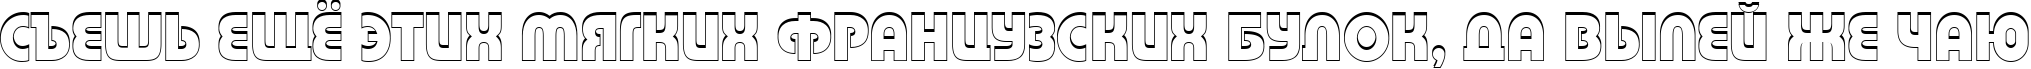 Пример написания шрифтом a_BighausTitul3D текста на русском